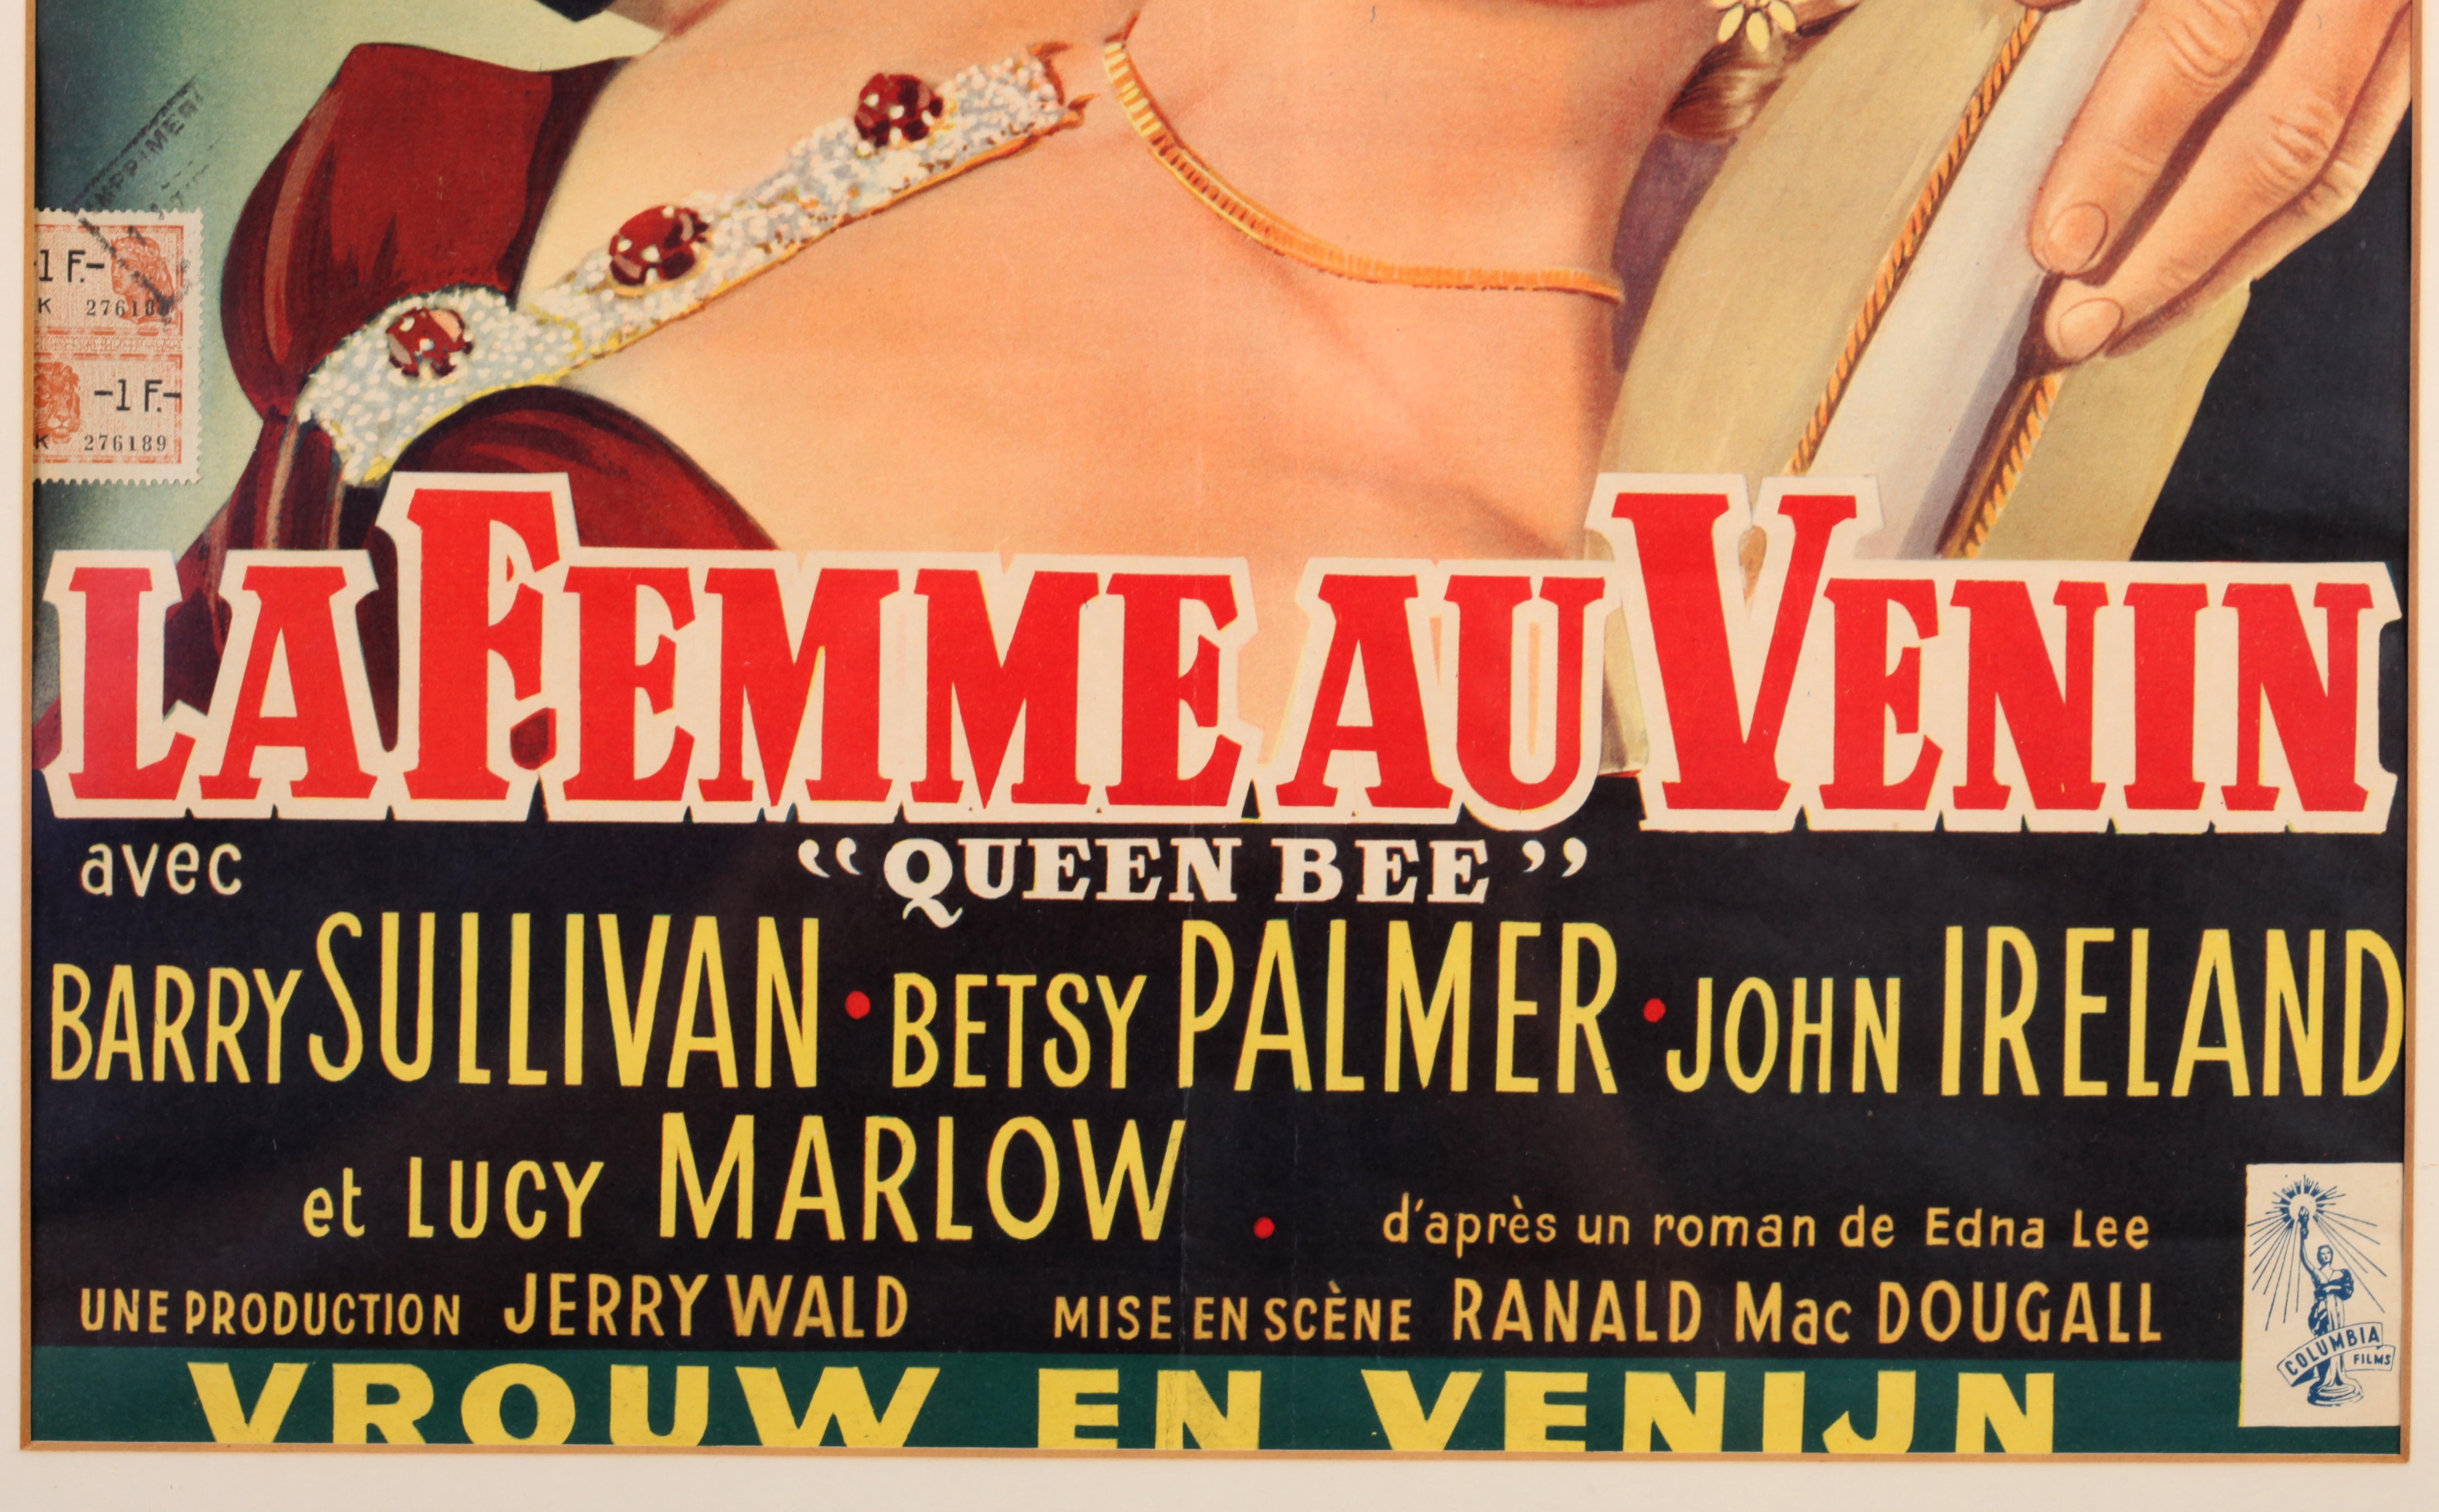 Joan Crawford et Ingrid Bergman Vintage Movie Posters, Queen Bee et Intermezzo en vente 1